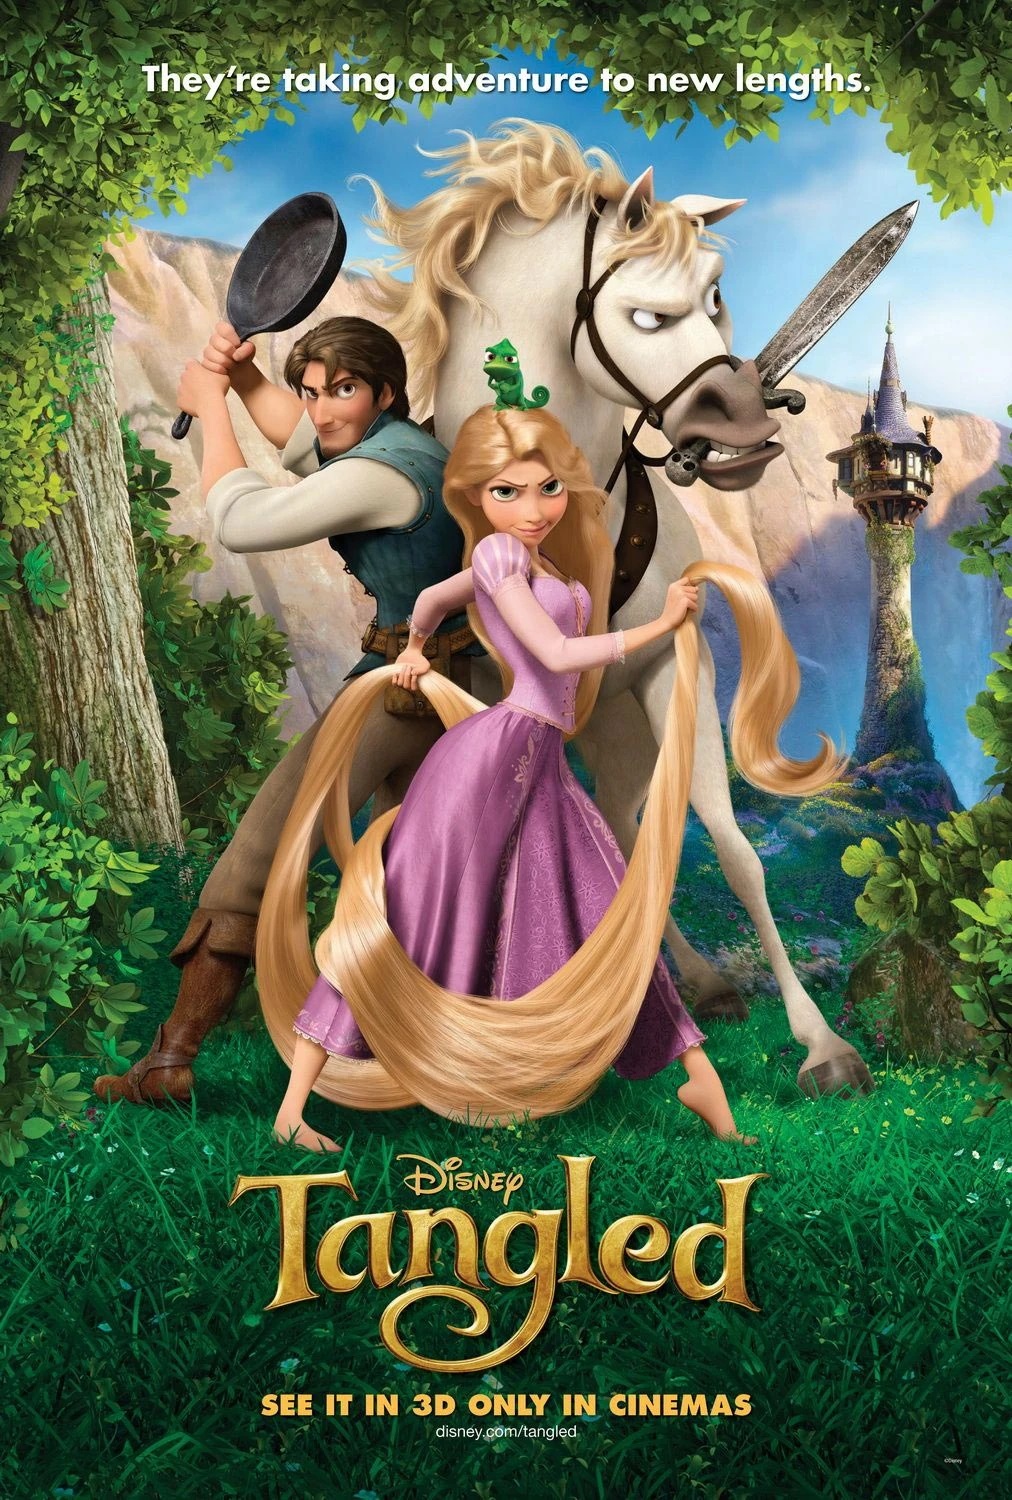 The Disney film, Tangled